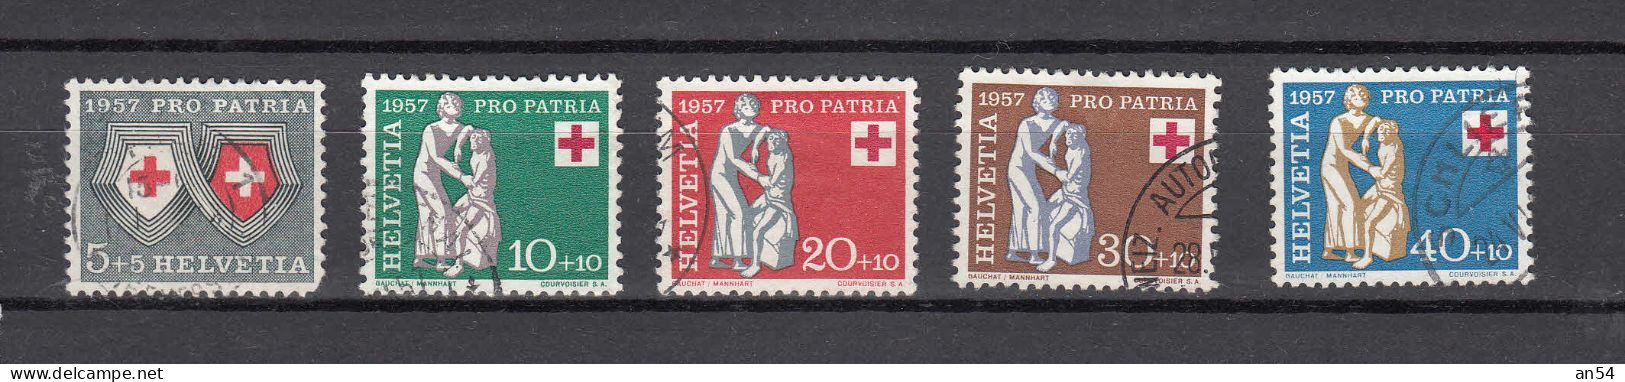 PP   1957  N° B81 à B85  OBLITERES   COTE 20.00         CATALOGUE SBK - Gebraucht